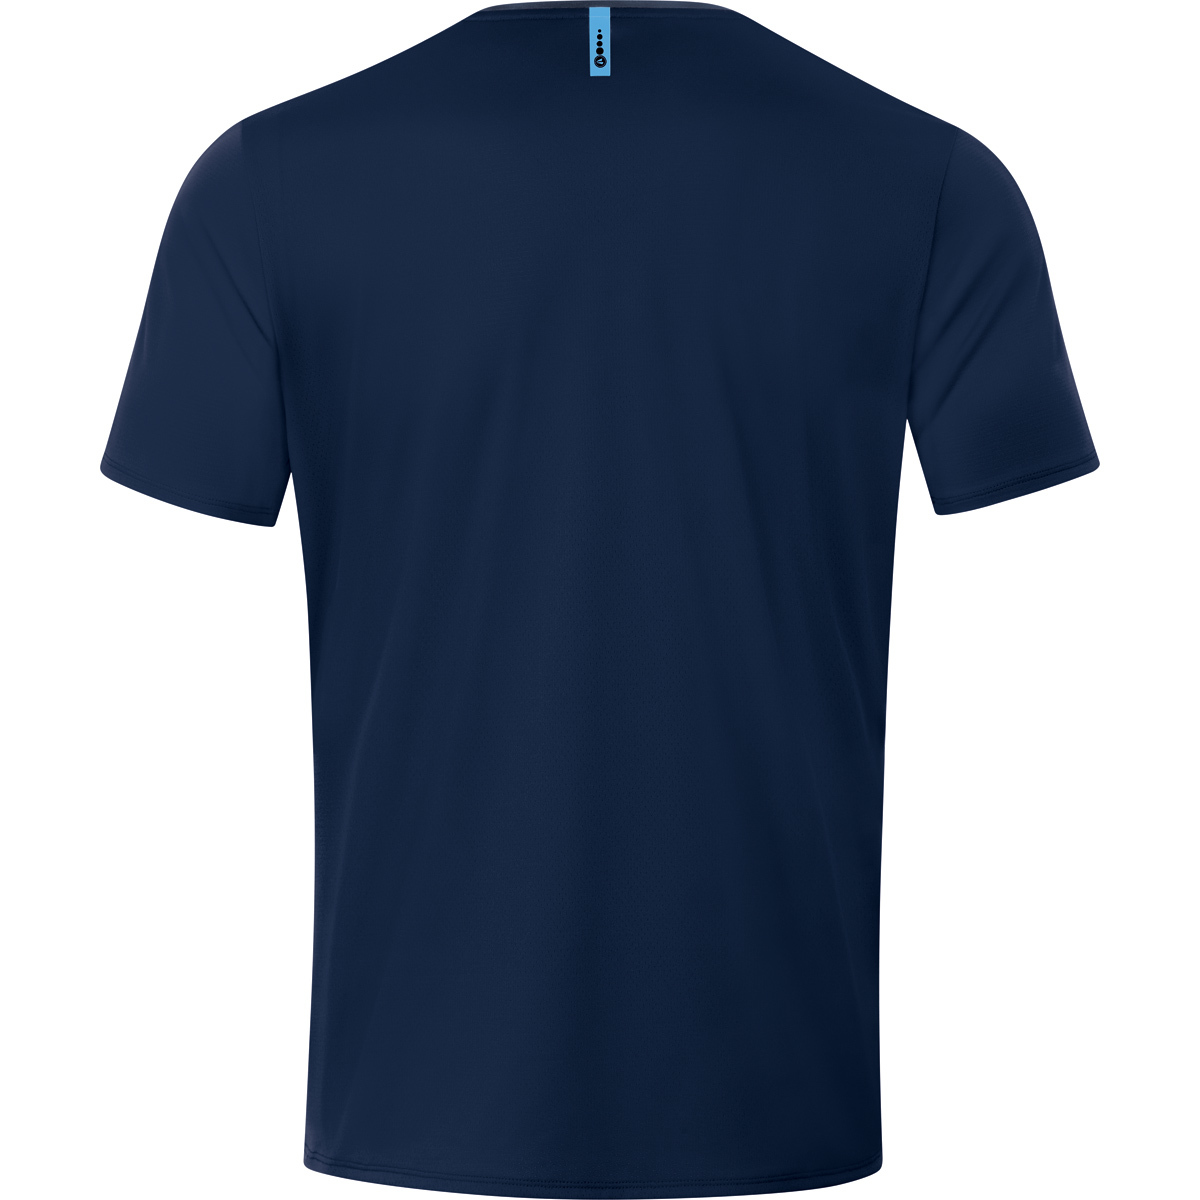 JAKO T-Shirt Champ 152, marine/darkblue/skyblue, 2.0 Gr. Kinder, 6120